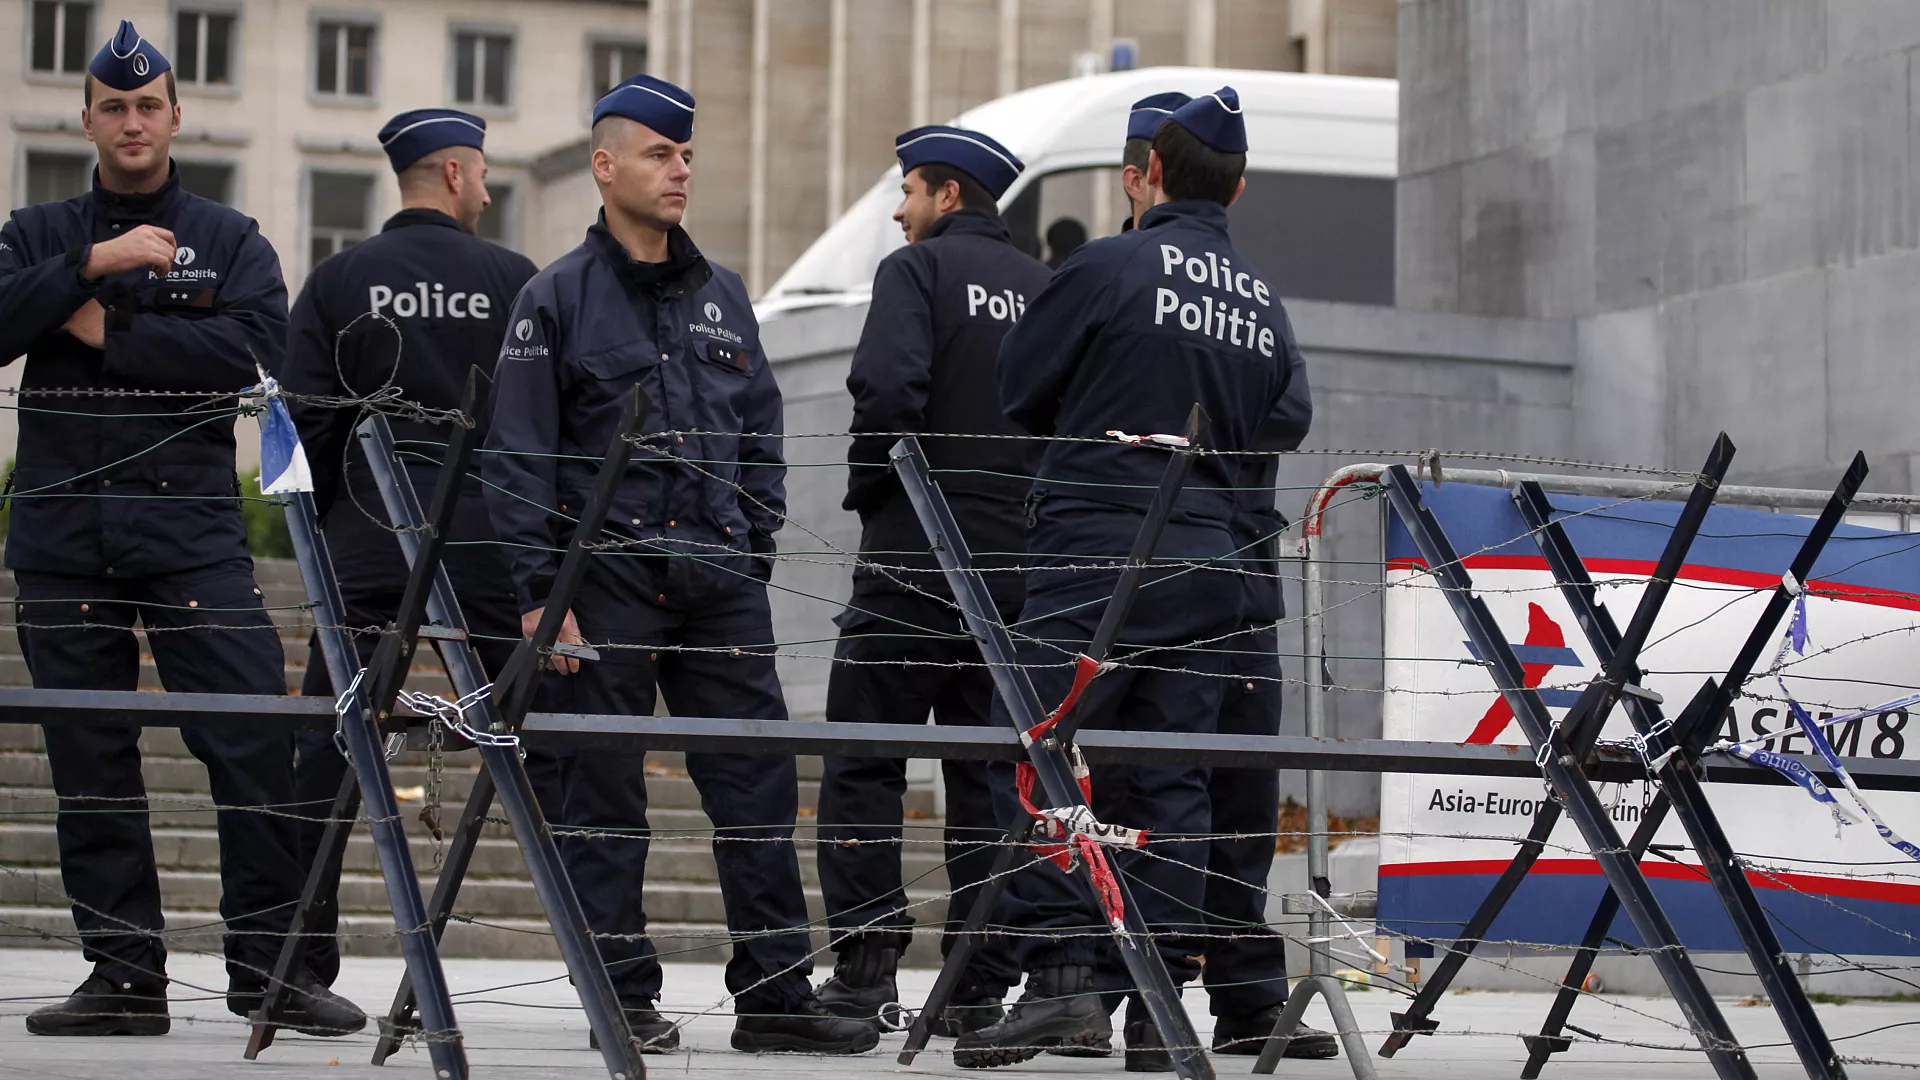 belgjika nen alarm nga terrorizmi policia bastis 14 banesa gjate hetimeve